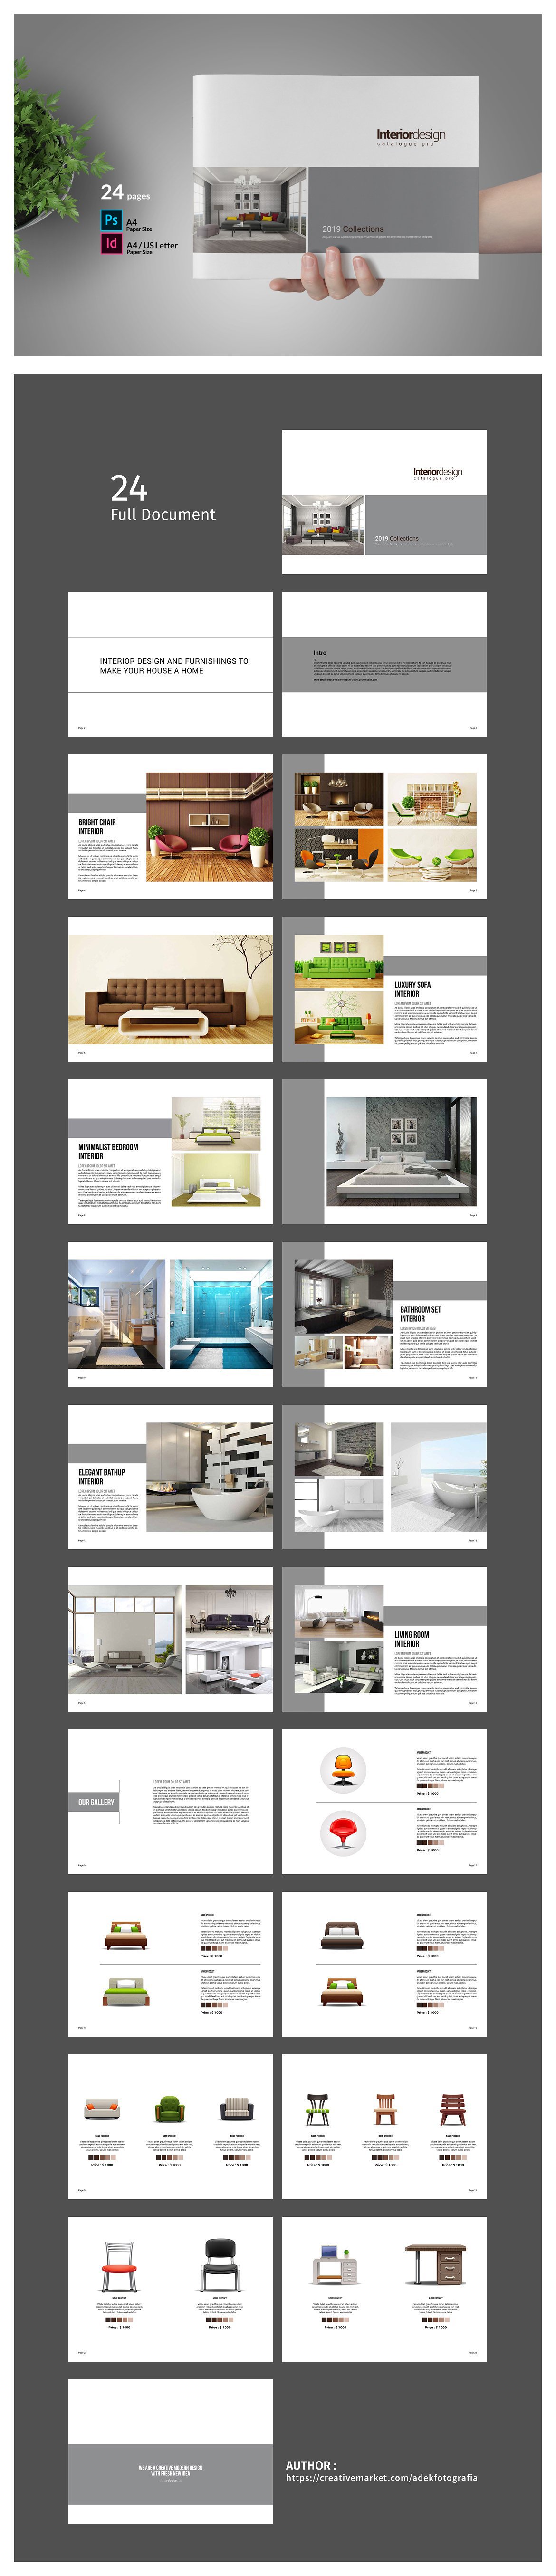 Simple Interior Brochure cover image.